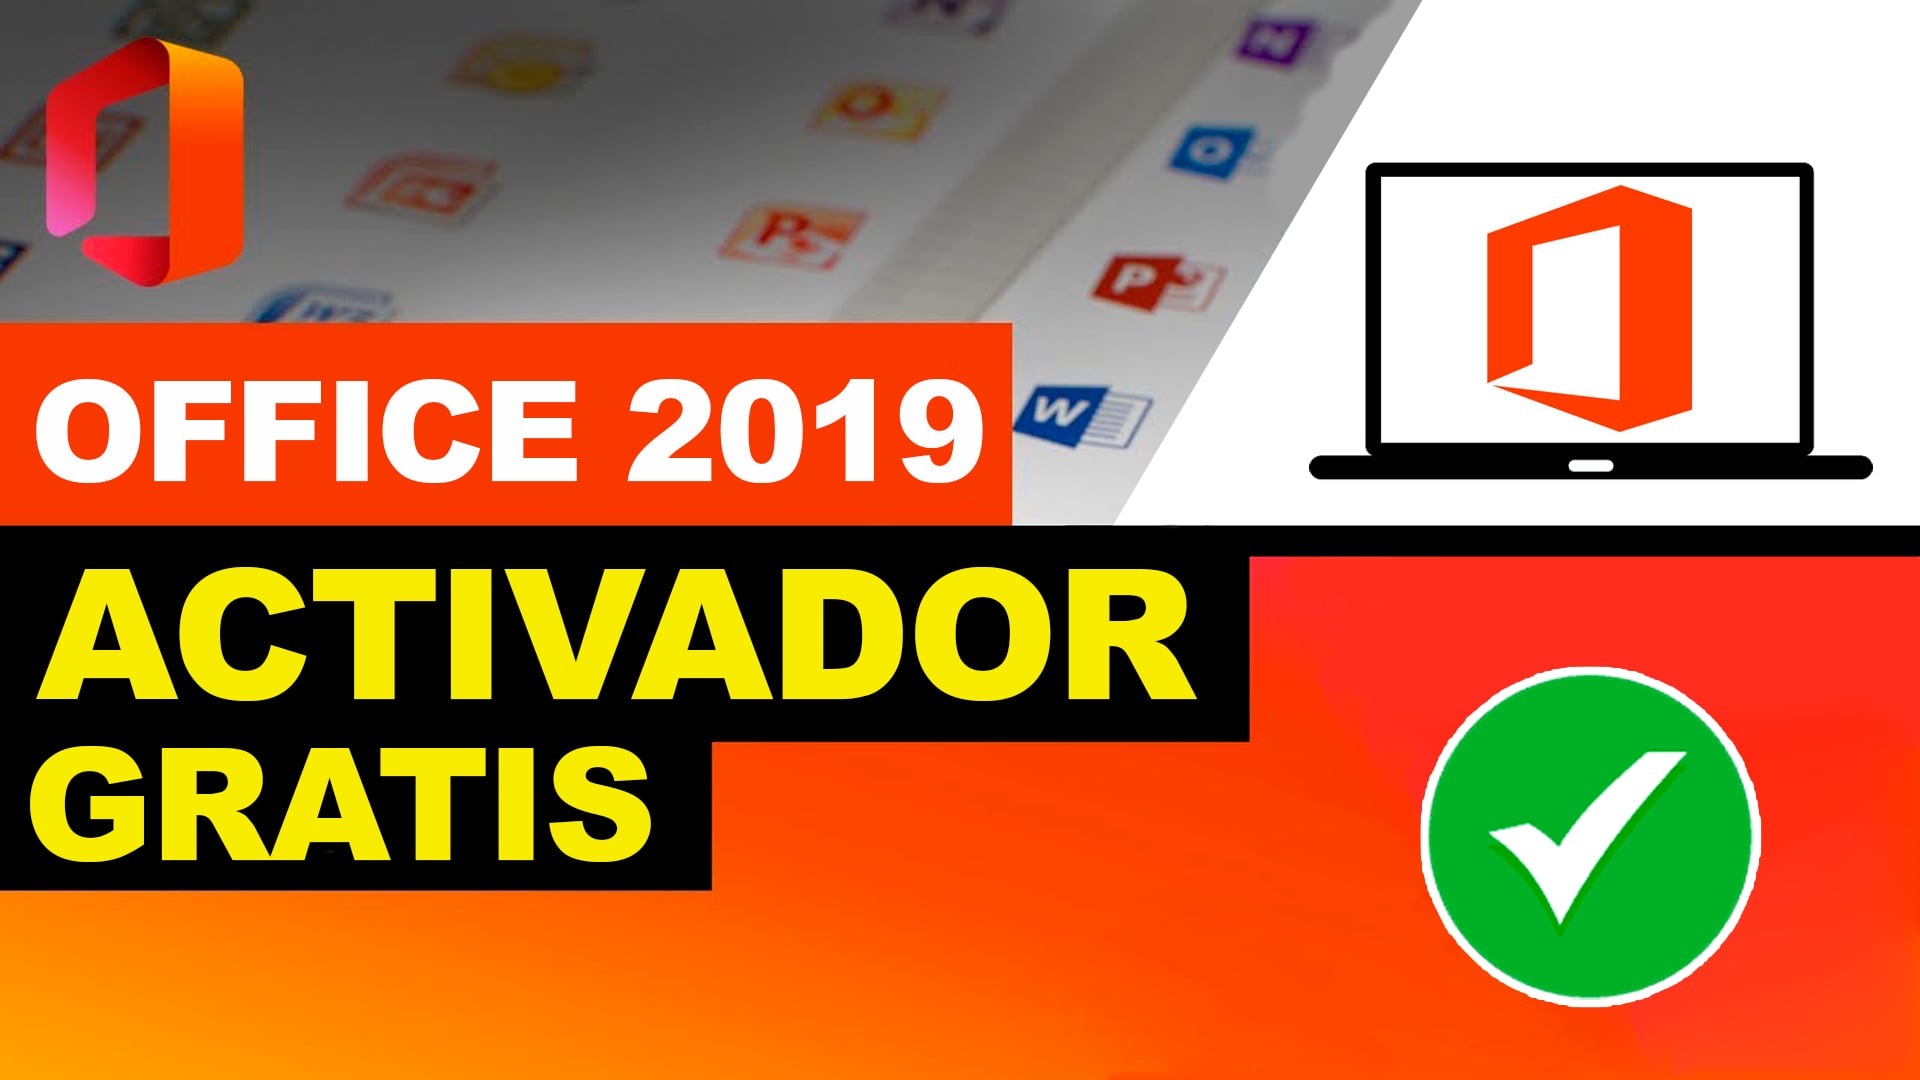 Activador Office 2019 Ratiborus GRATIS | Como Activar Office 2019 |  Activacion Office KMS Tools on Vimeo